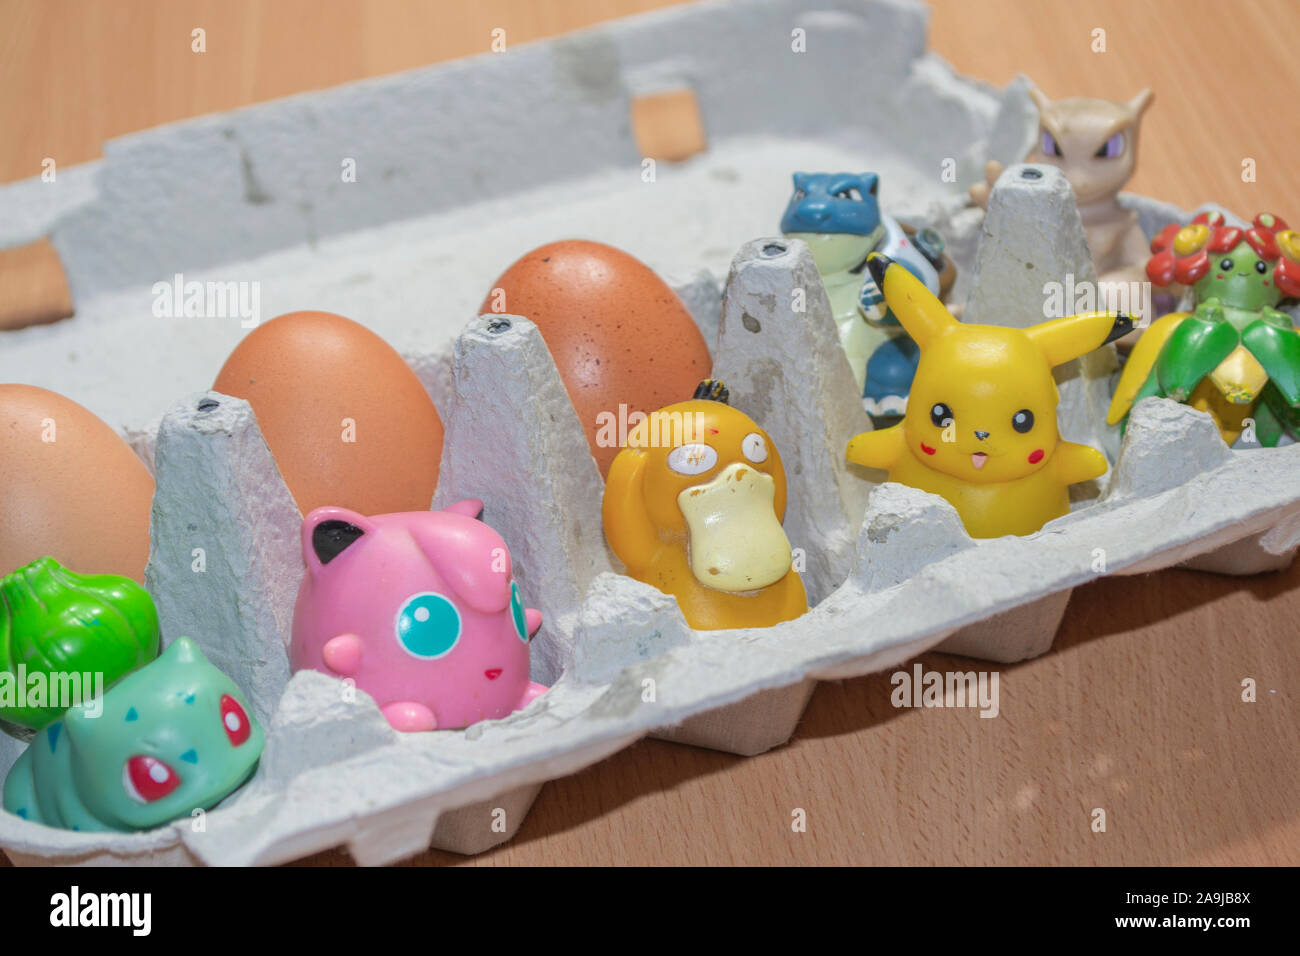 Old Pokemon toys in chicken eggs box Stock Photo - Alamy